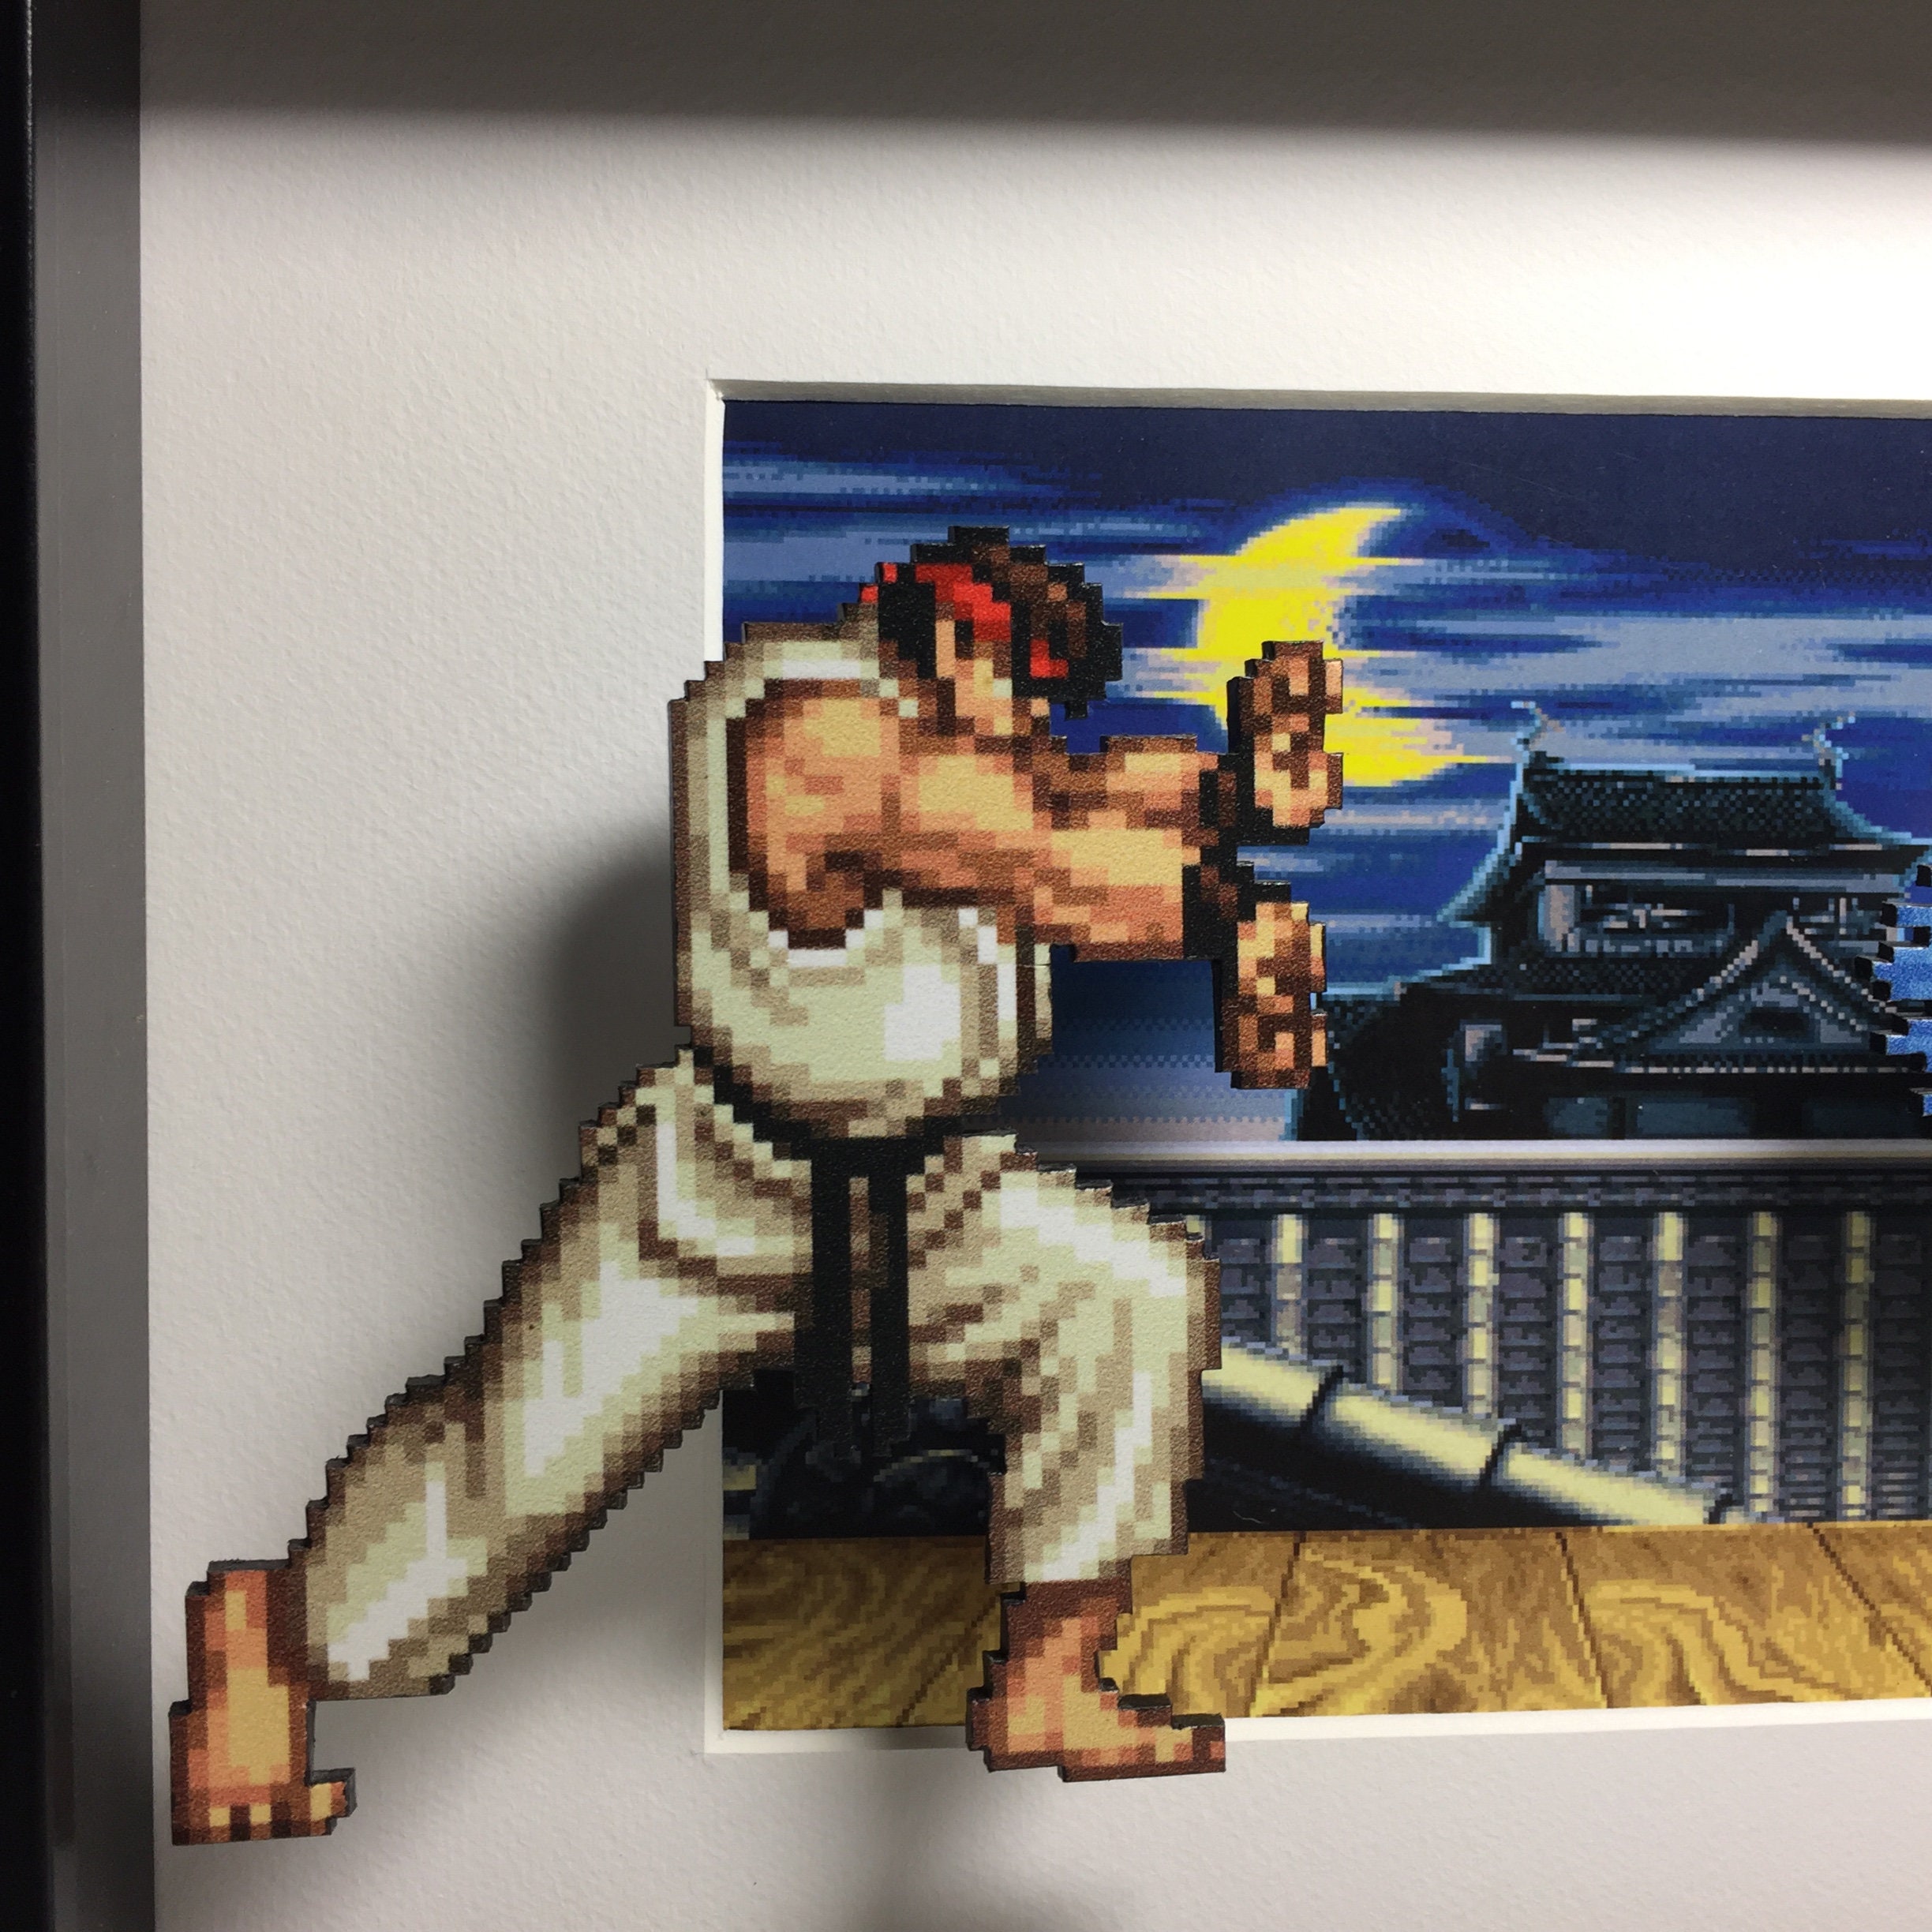 Ryu Street Fighter Graphic · Creative Fabrica